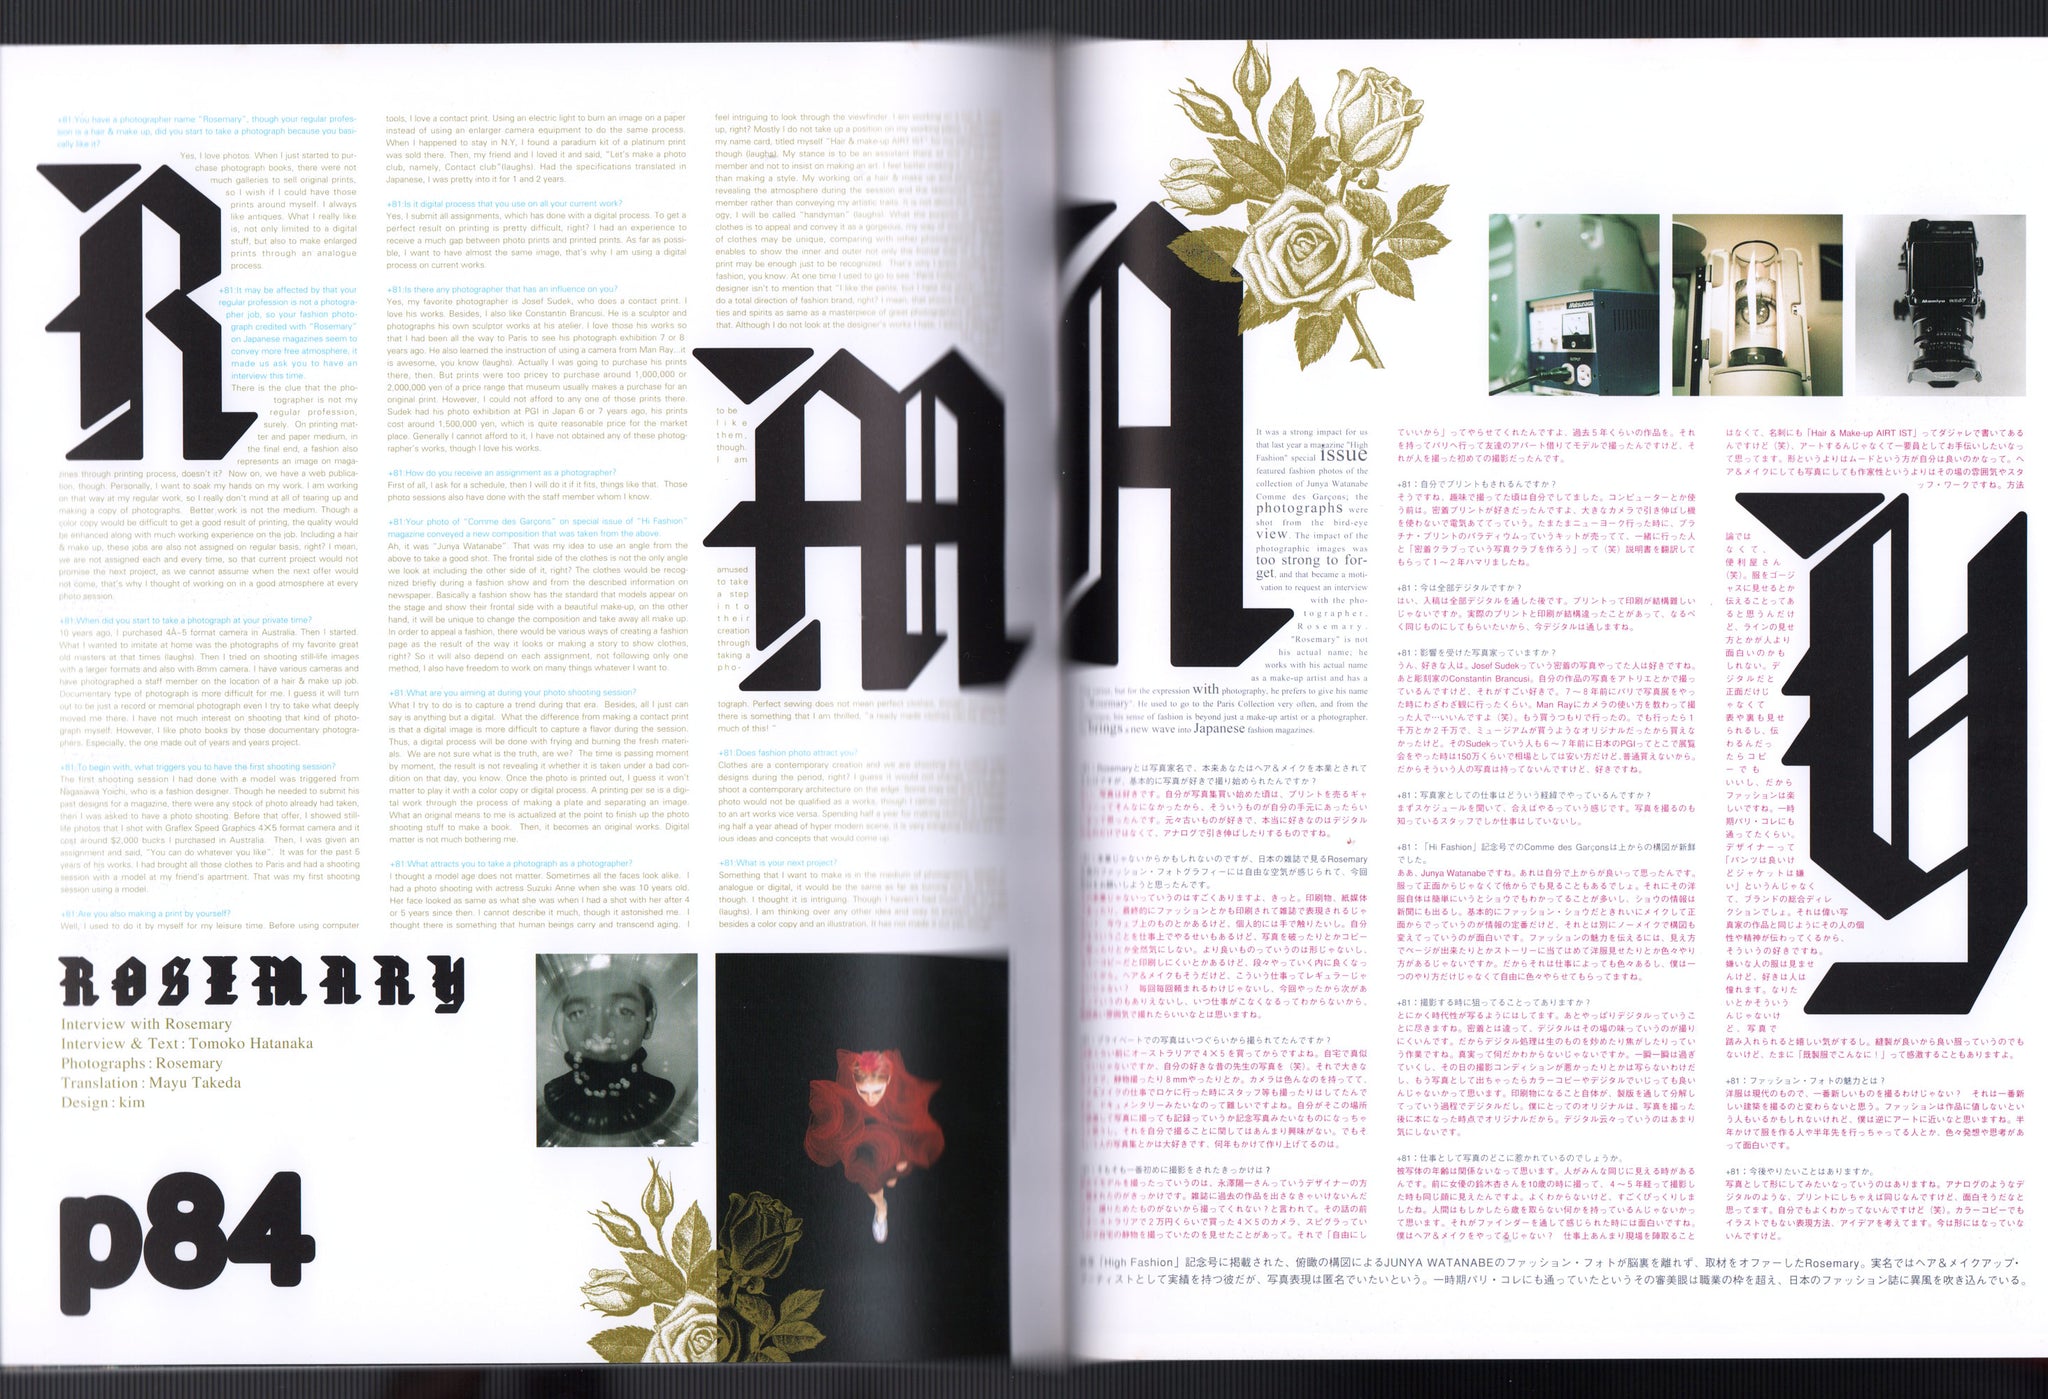 +81 Plus Eighty One magazine #13 [winter 2001 / photographer issue: new york tokyo]